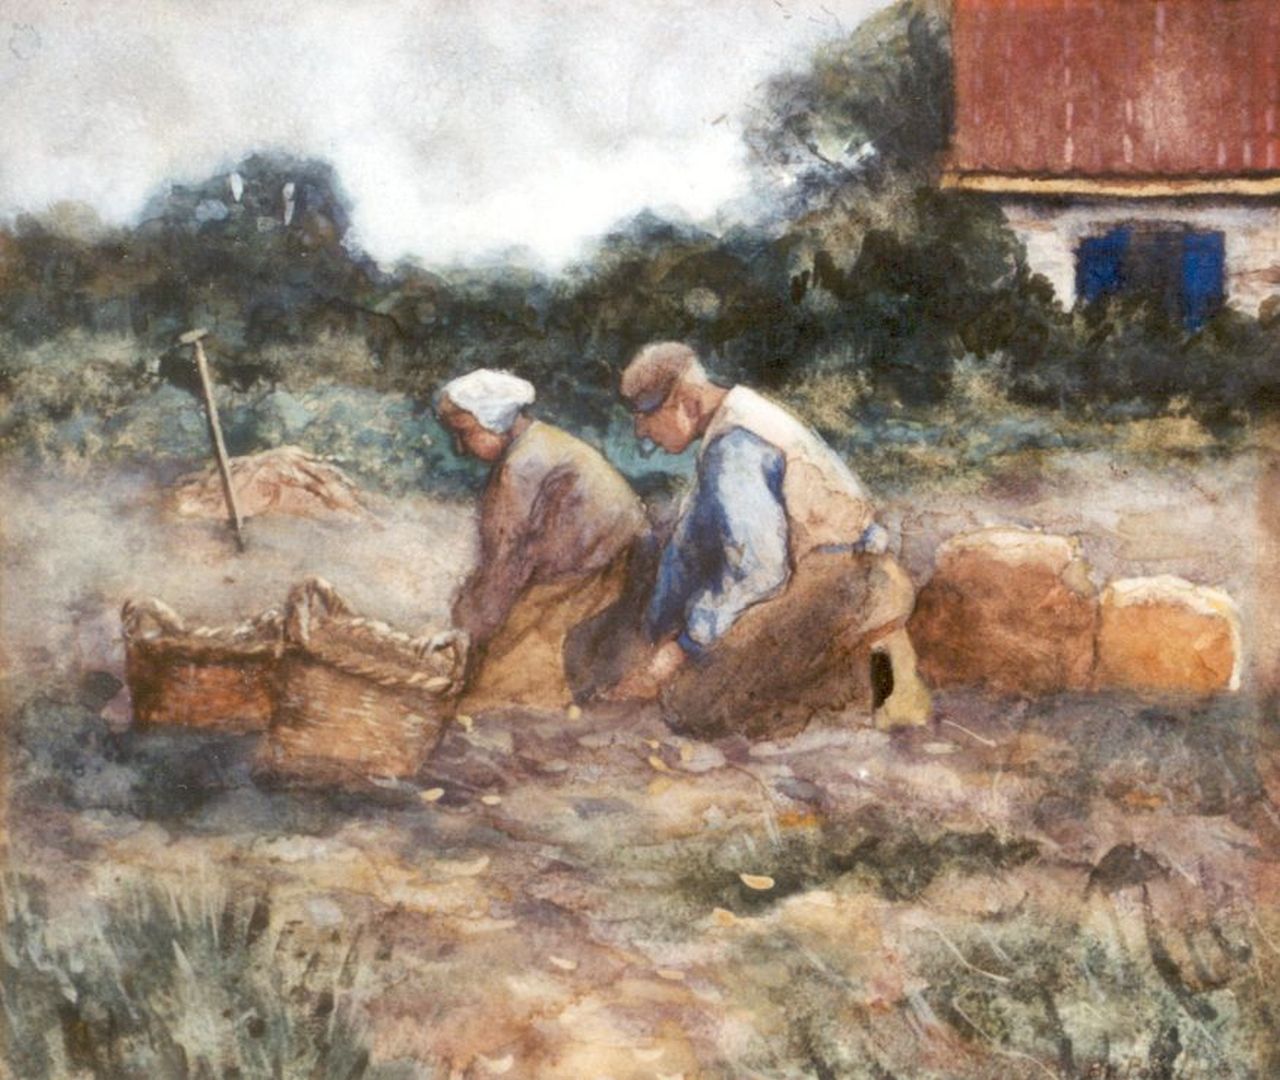 Polvliet B.J.A.  | 'Barend' Jan Abraham Polvliet, Aardappels rooien, aquarel op papier 25,5 x 29,0 cm, gesigneerd rechtsonder